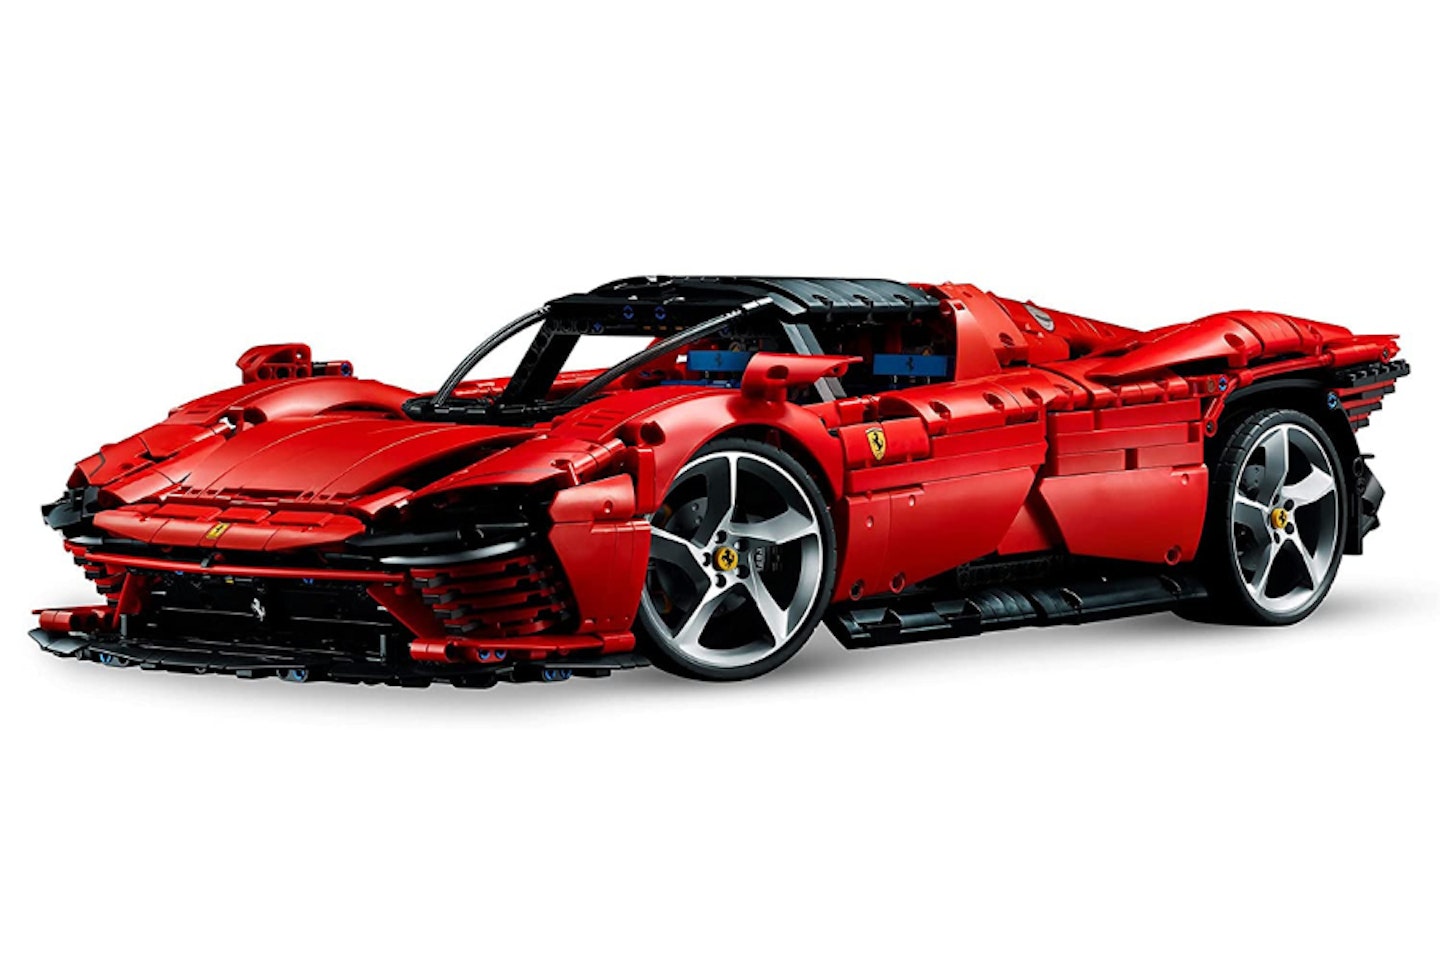 LEGO Technic 42143 Ferrari Daytona SP3 review part 2 - details